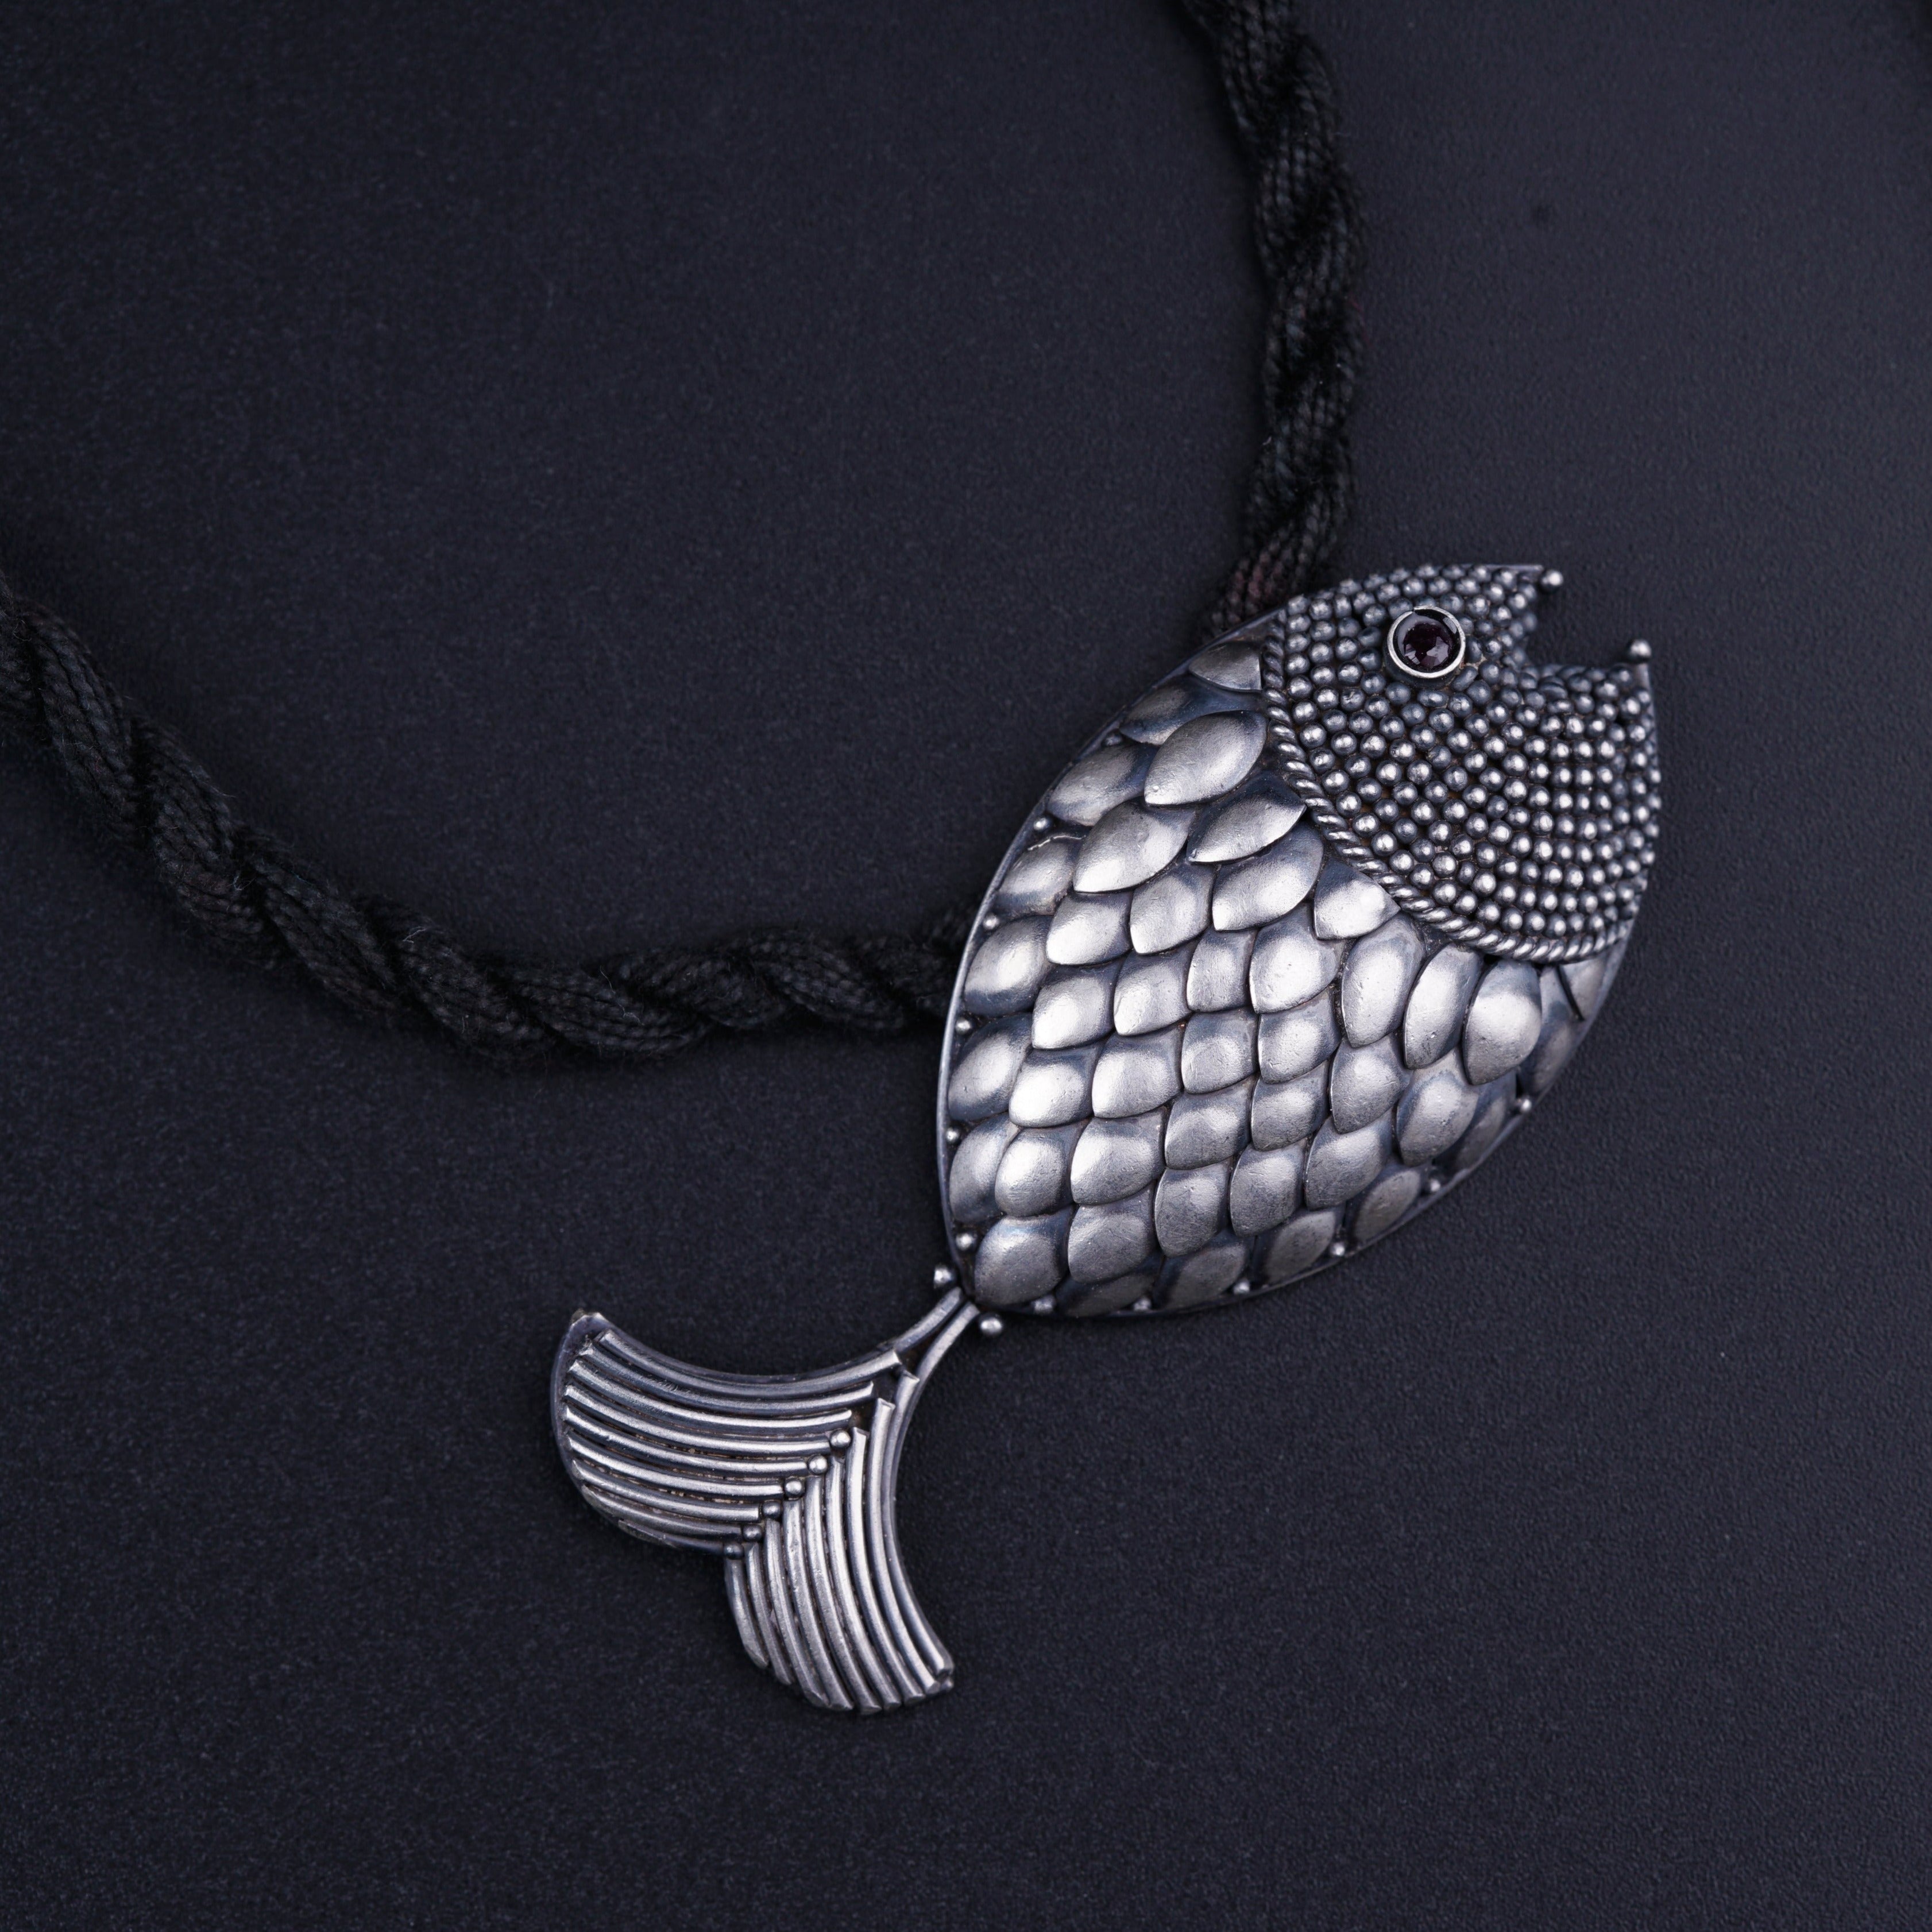 a silver fish pendant on a black cord